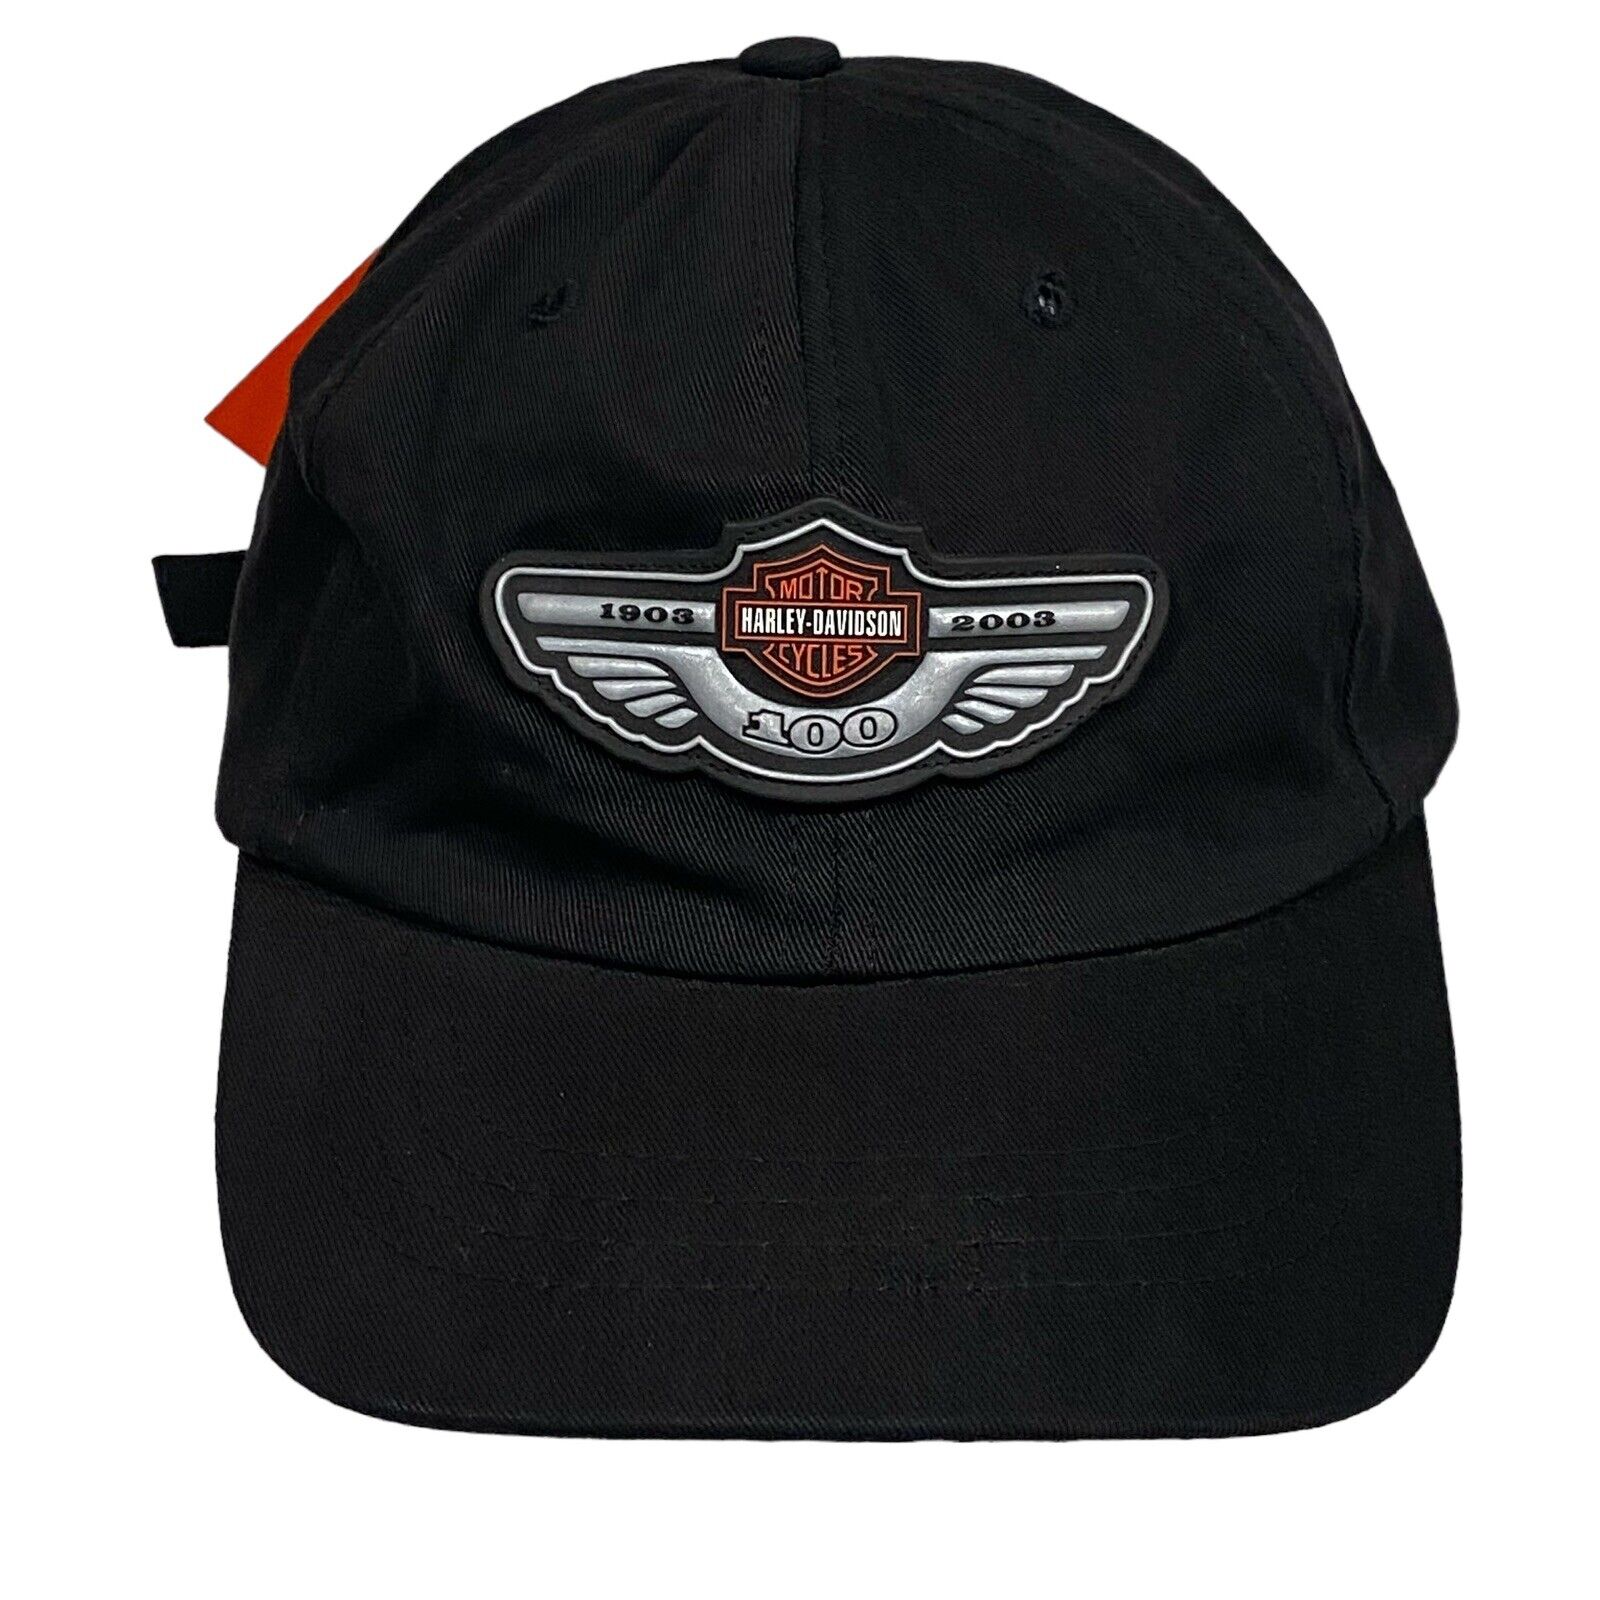 Vintage Harley Davidson Hat 100th Year Anniversary Baseball Cap 2003 Black NOS